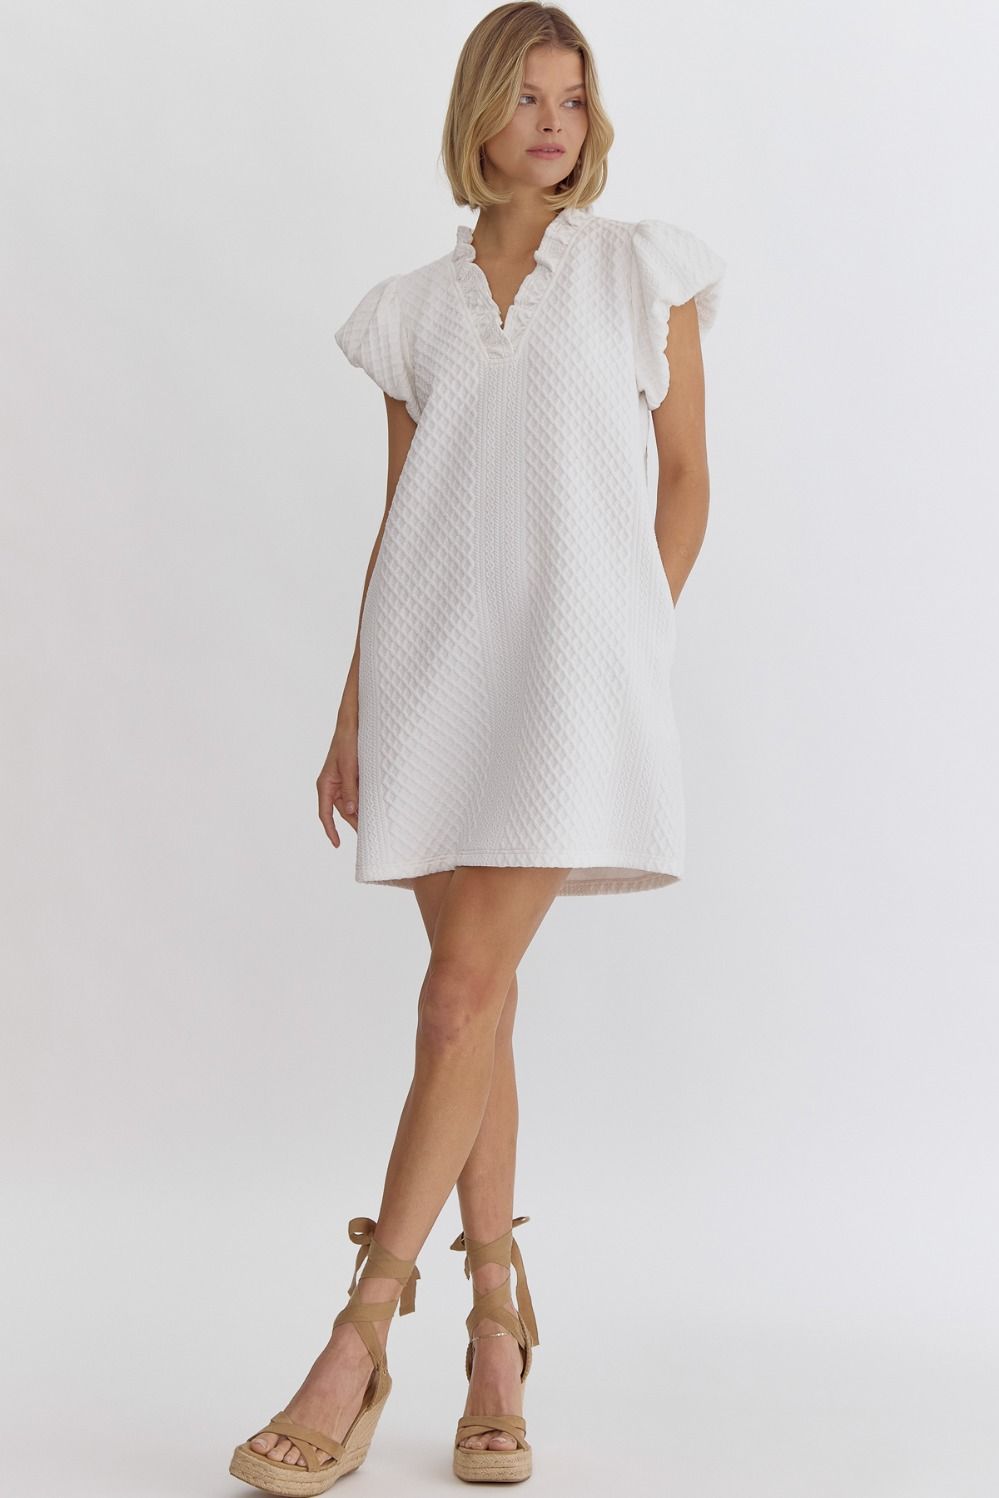 Textured short-sleeve v-neck mini dress featuring bubble sleeves.